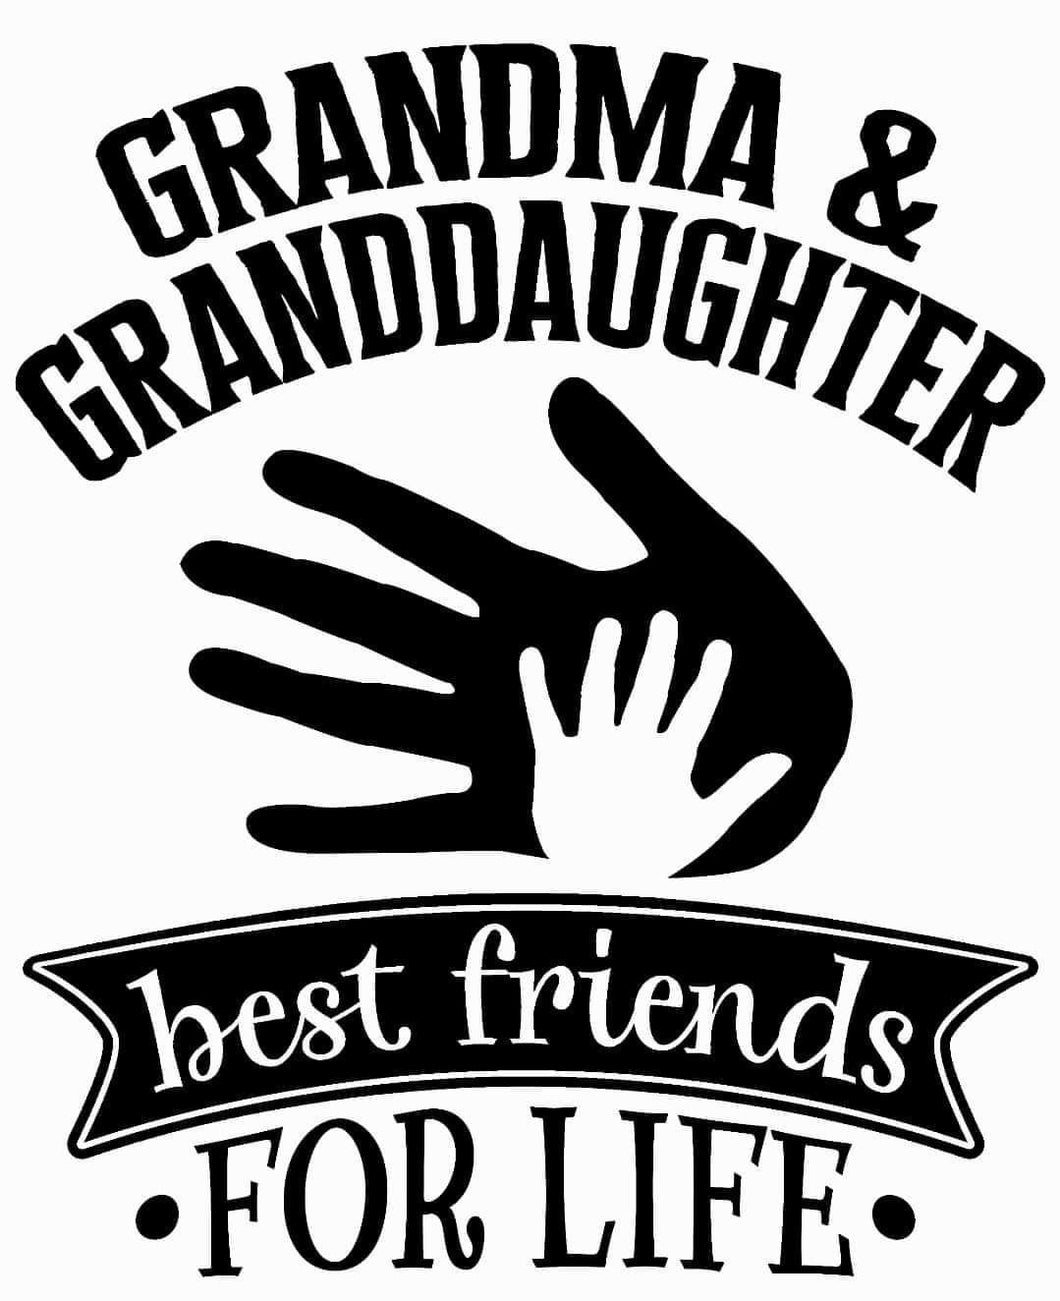 GRANDMA GRANDDAUGHTER  BEST FRIENDS